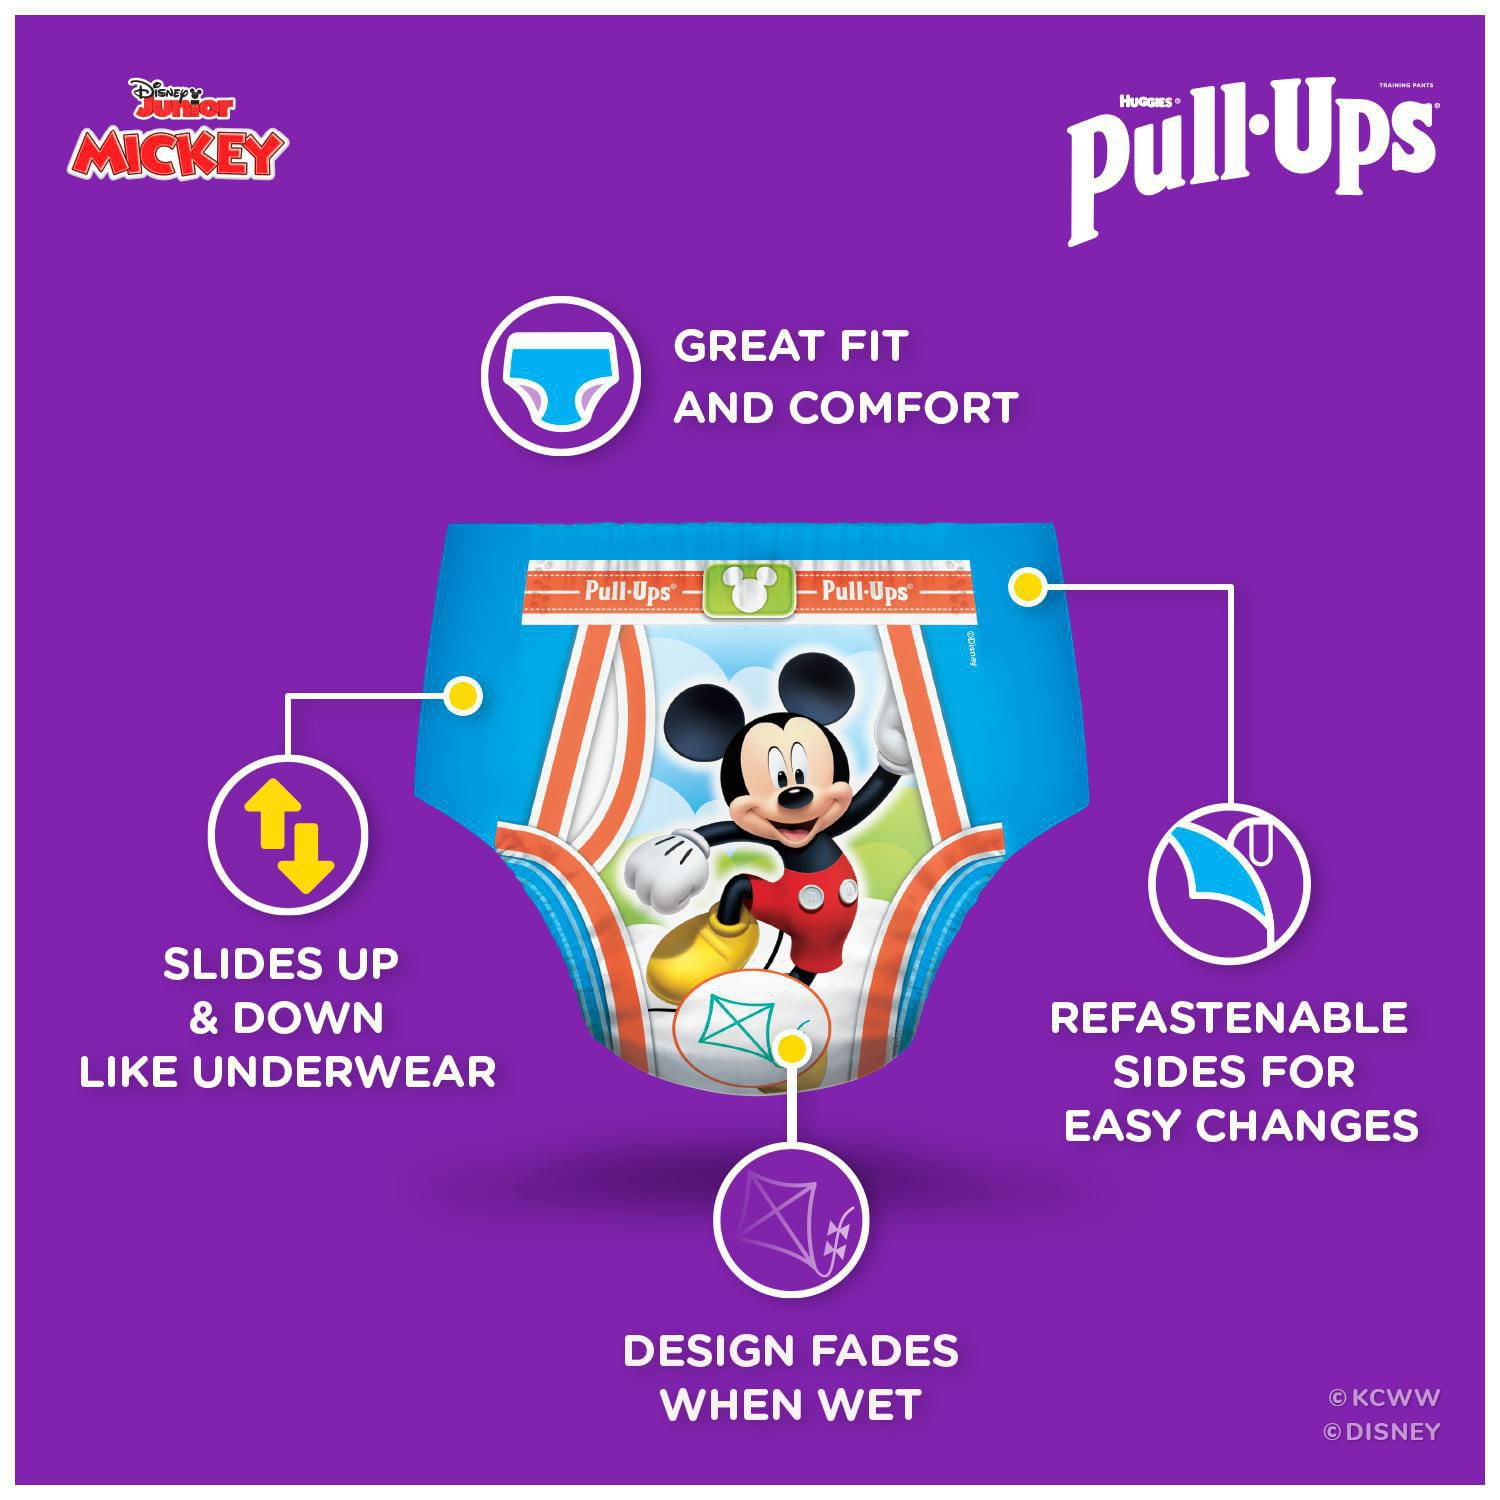 Pull-Ups Learning Designs Training Pants, Giga Pack - Boys 